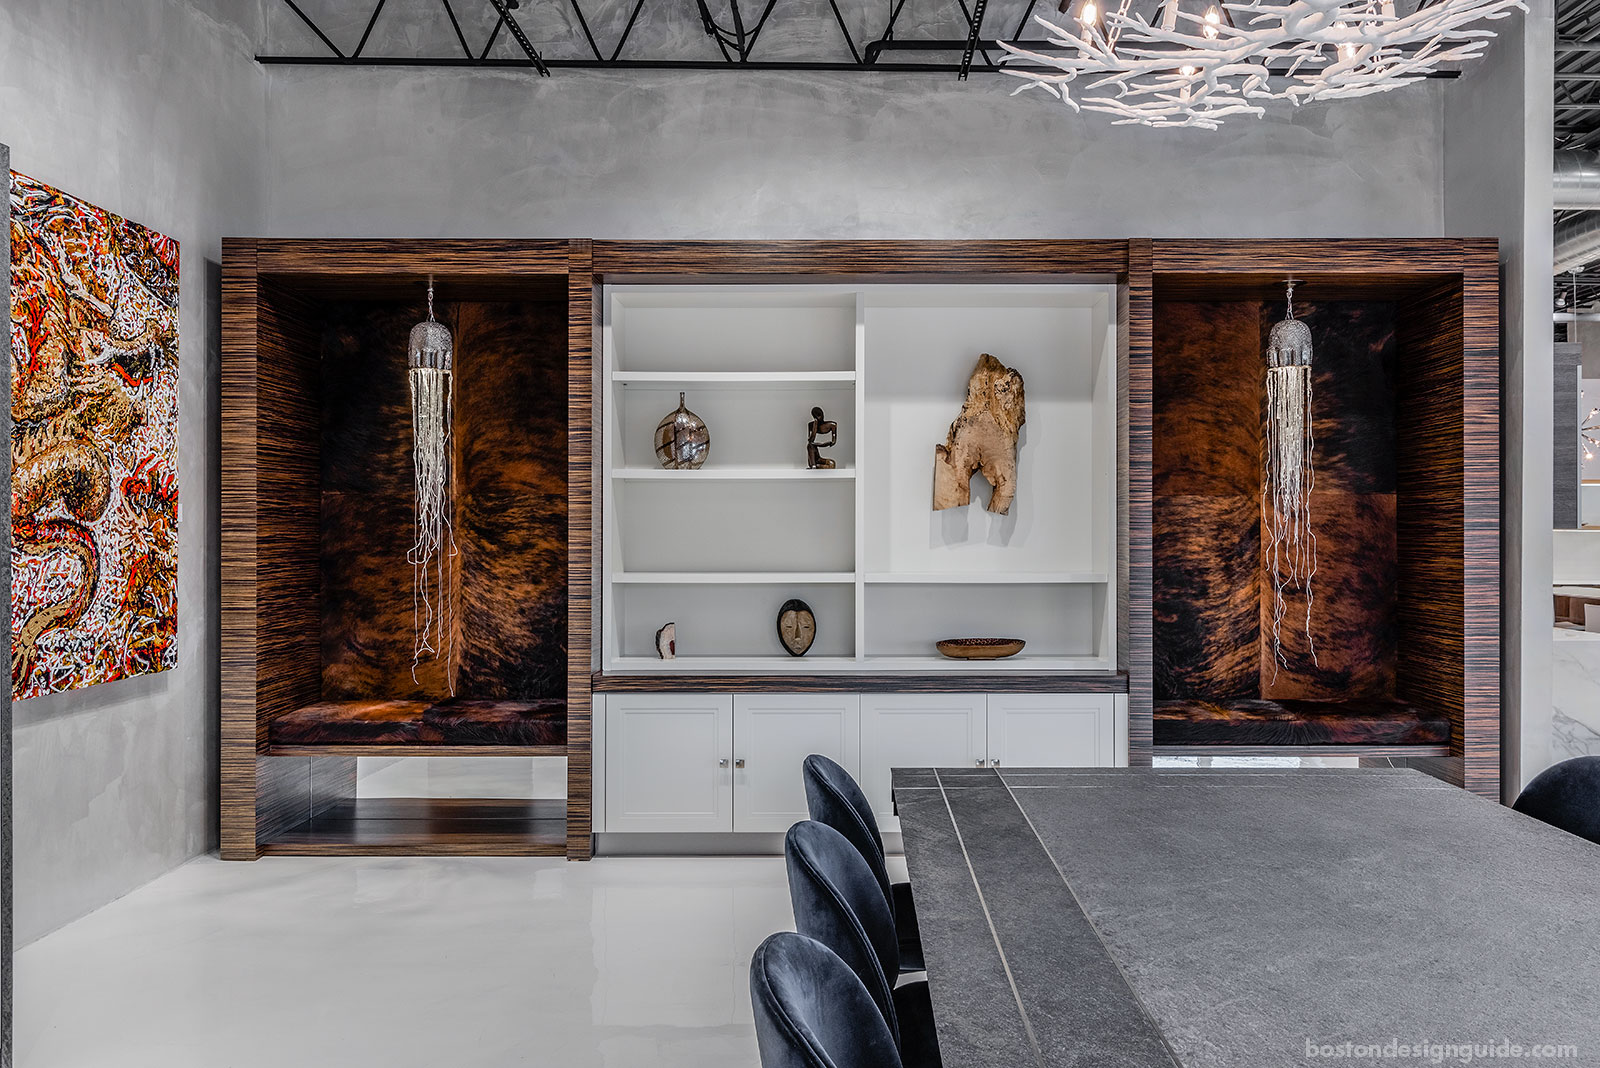 Newton Kitchens & Design new showroom space